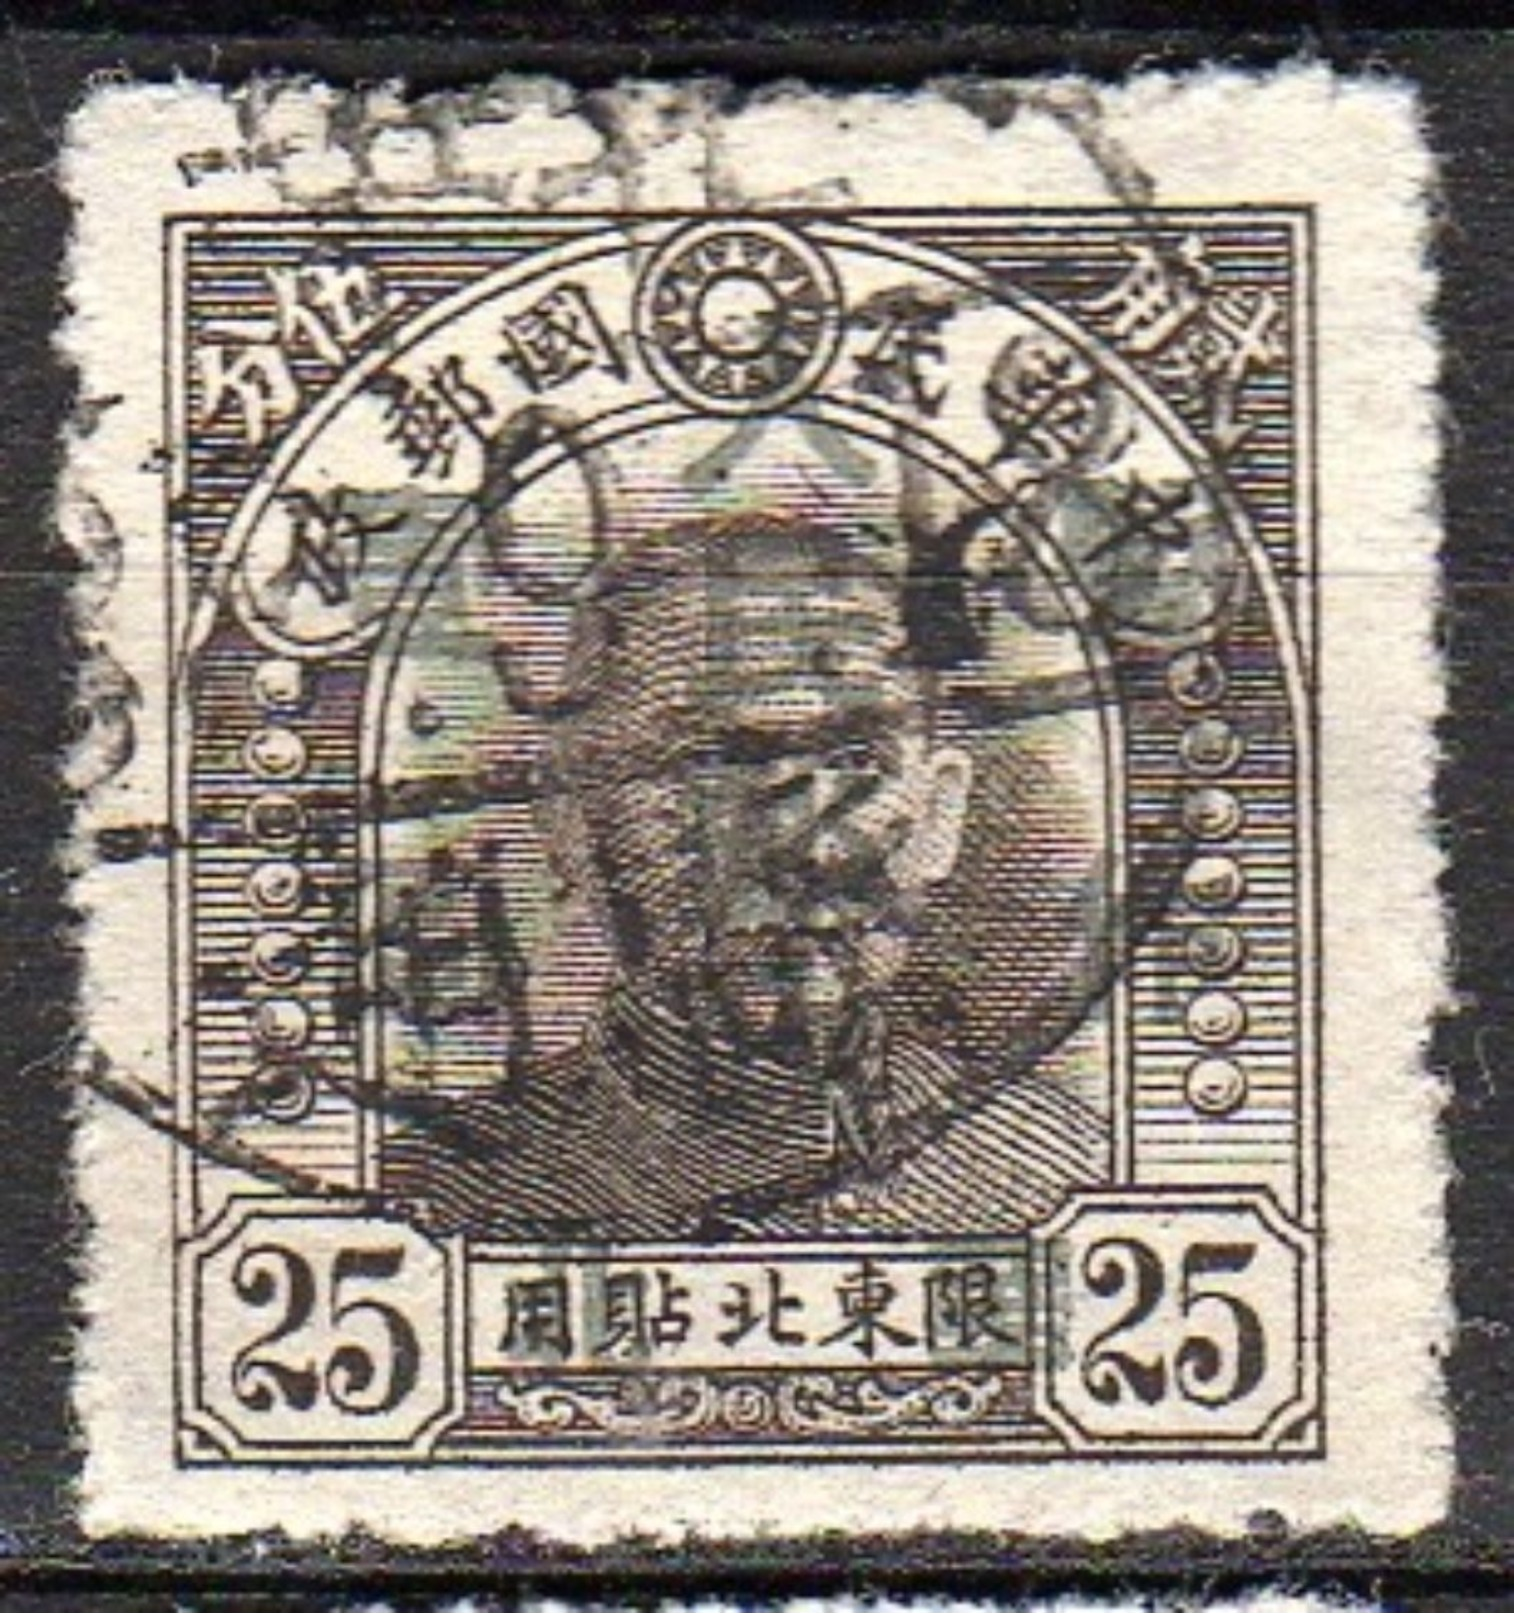 $1/25 Yang NC358 Basic Stamp WIDE Type Used (64) - Noord-China 1949-50